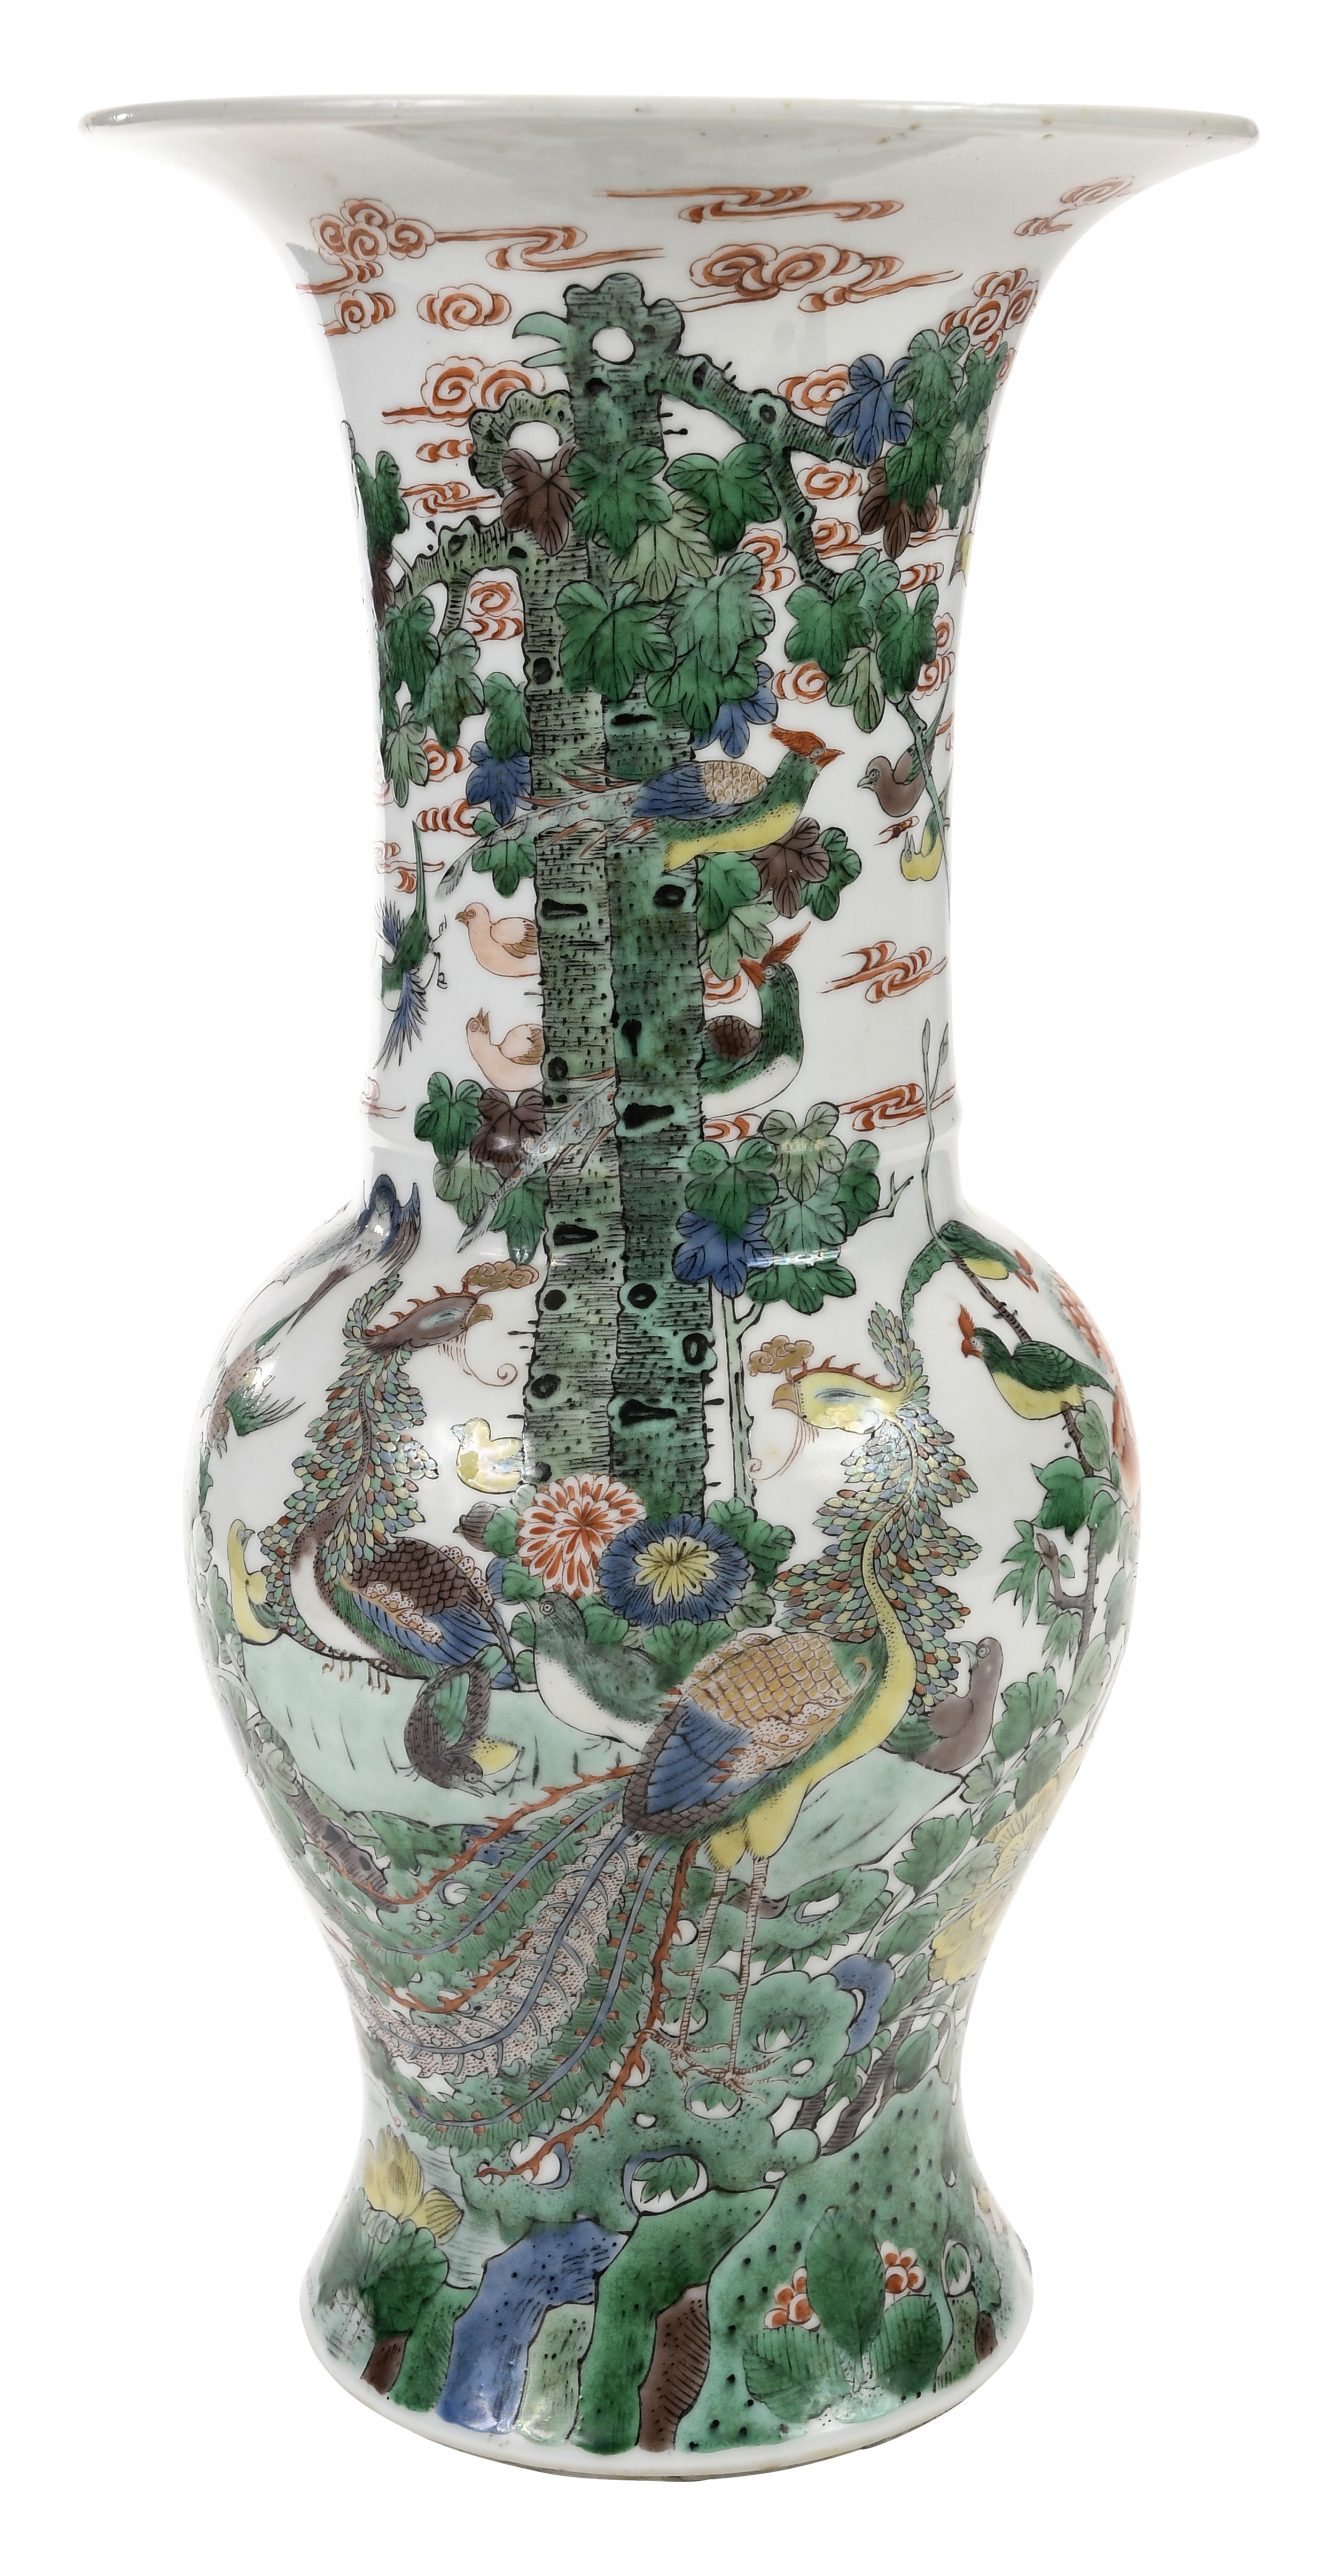 Lot 621 | Chinese Porcelain Famille Verte Flared Rim Vase<br />
Estimate: $2,000 - $3,000